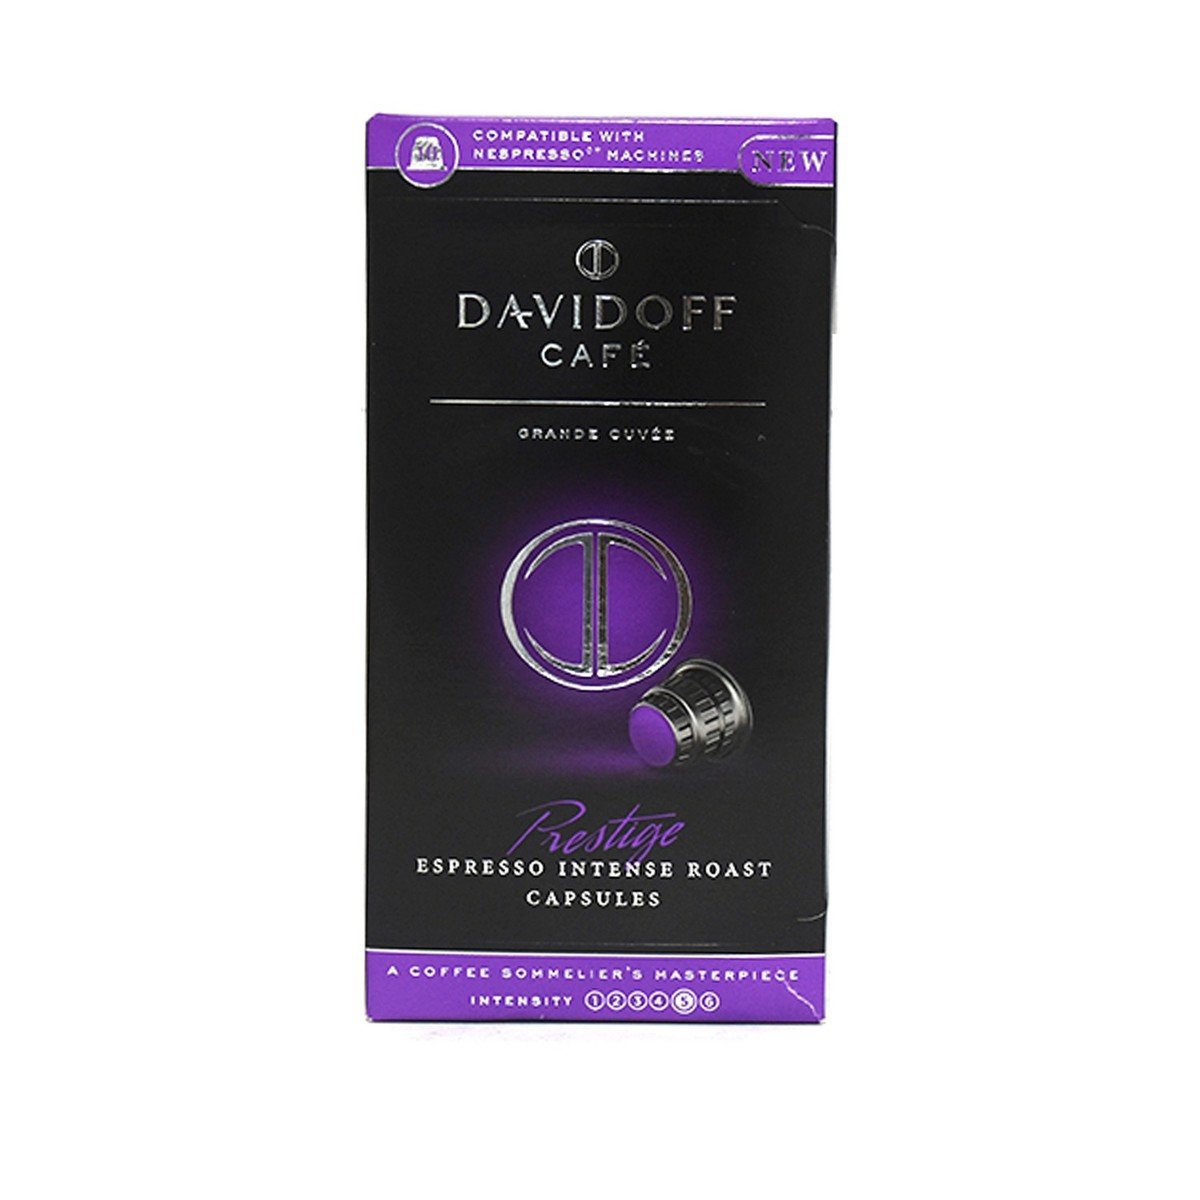 Davidoff Cafe Prestige Espresso Intense Roast Capsules 55 g